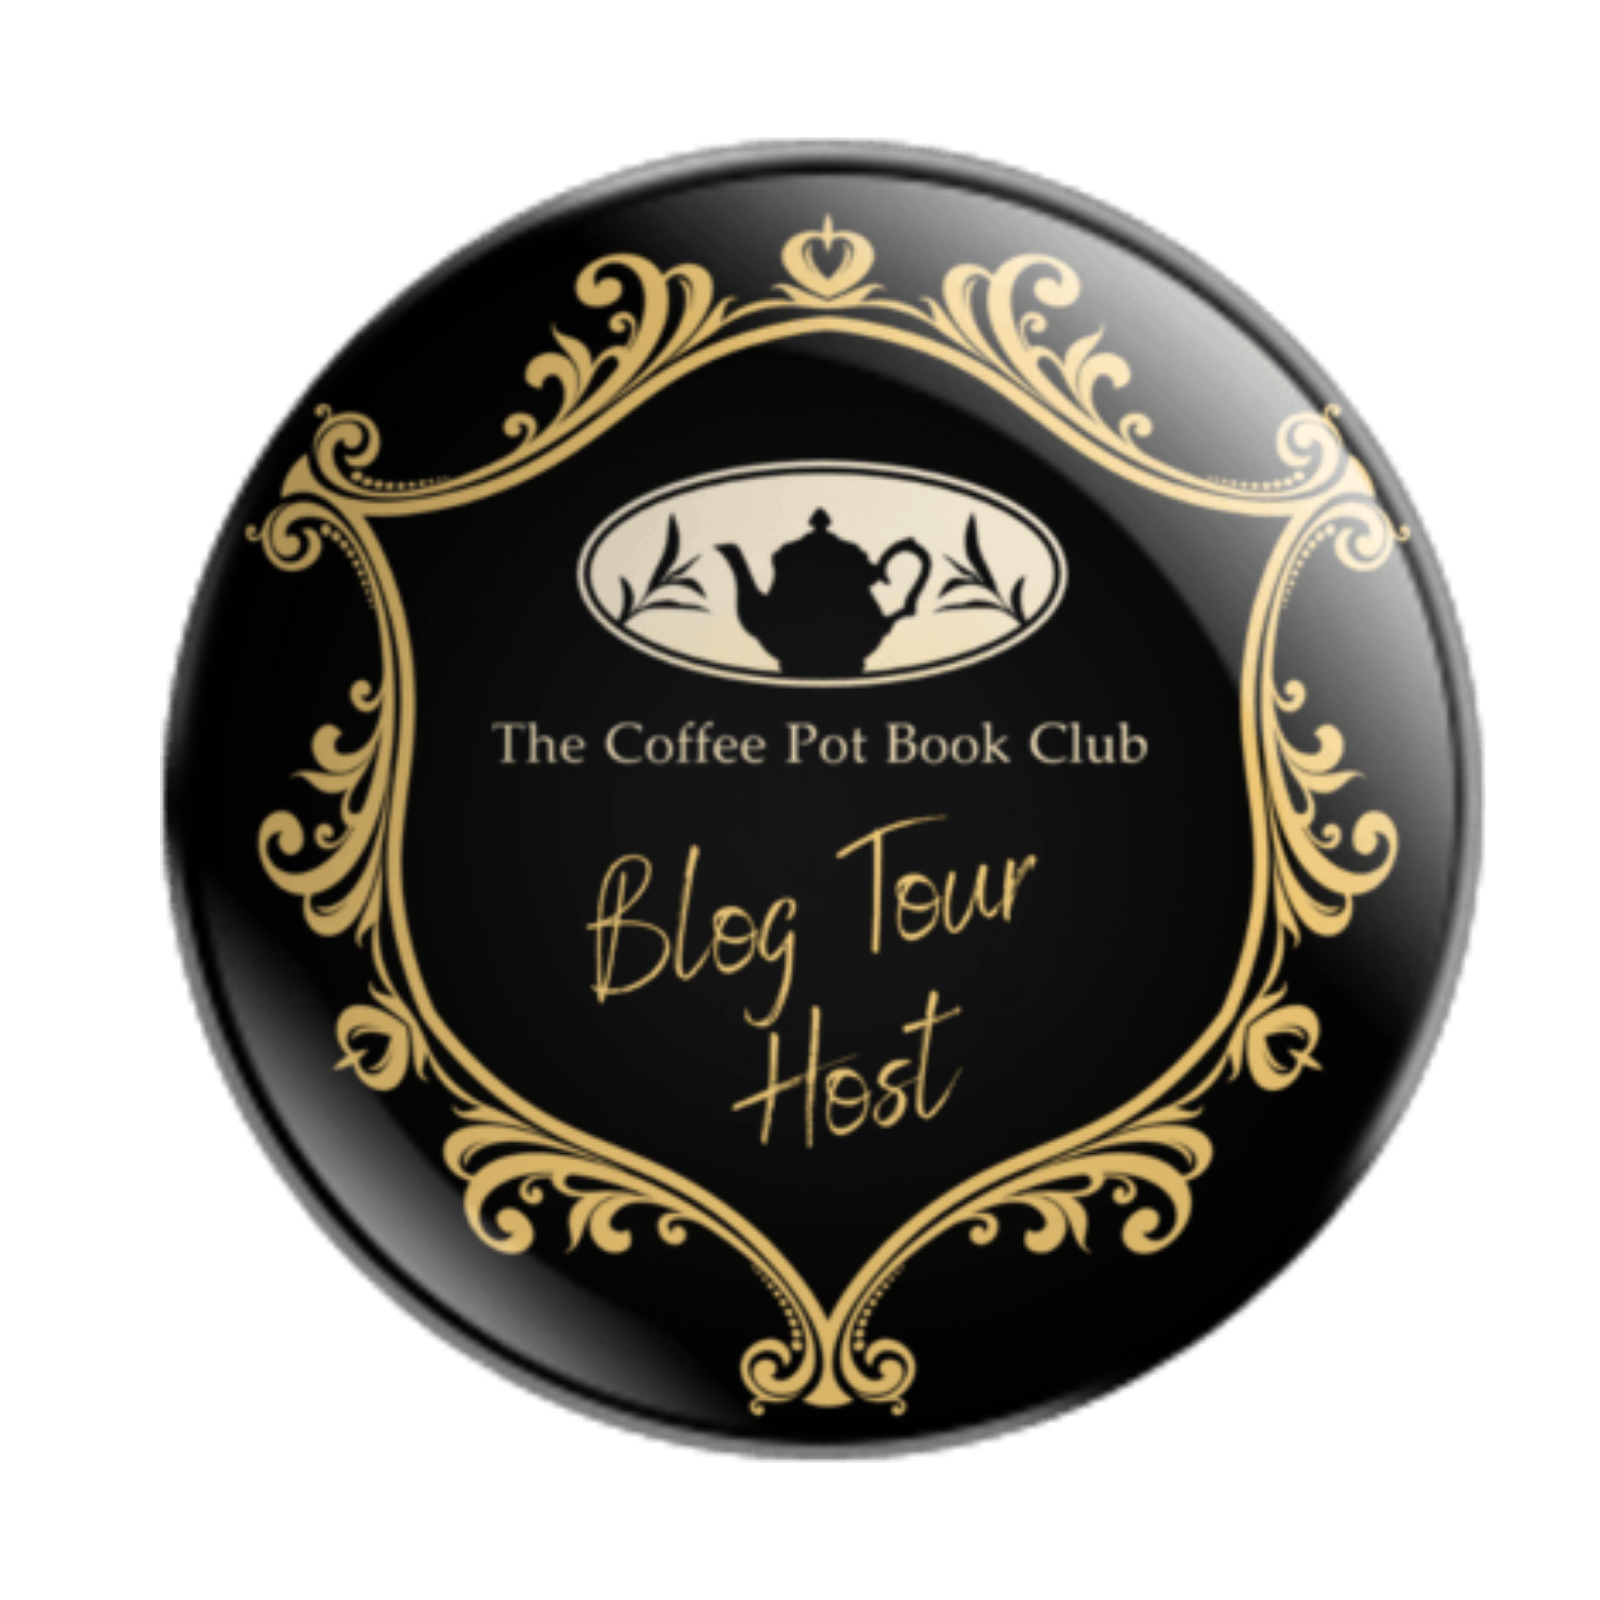 The Coffee Pot Book Club Blog Tour Host